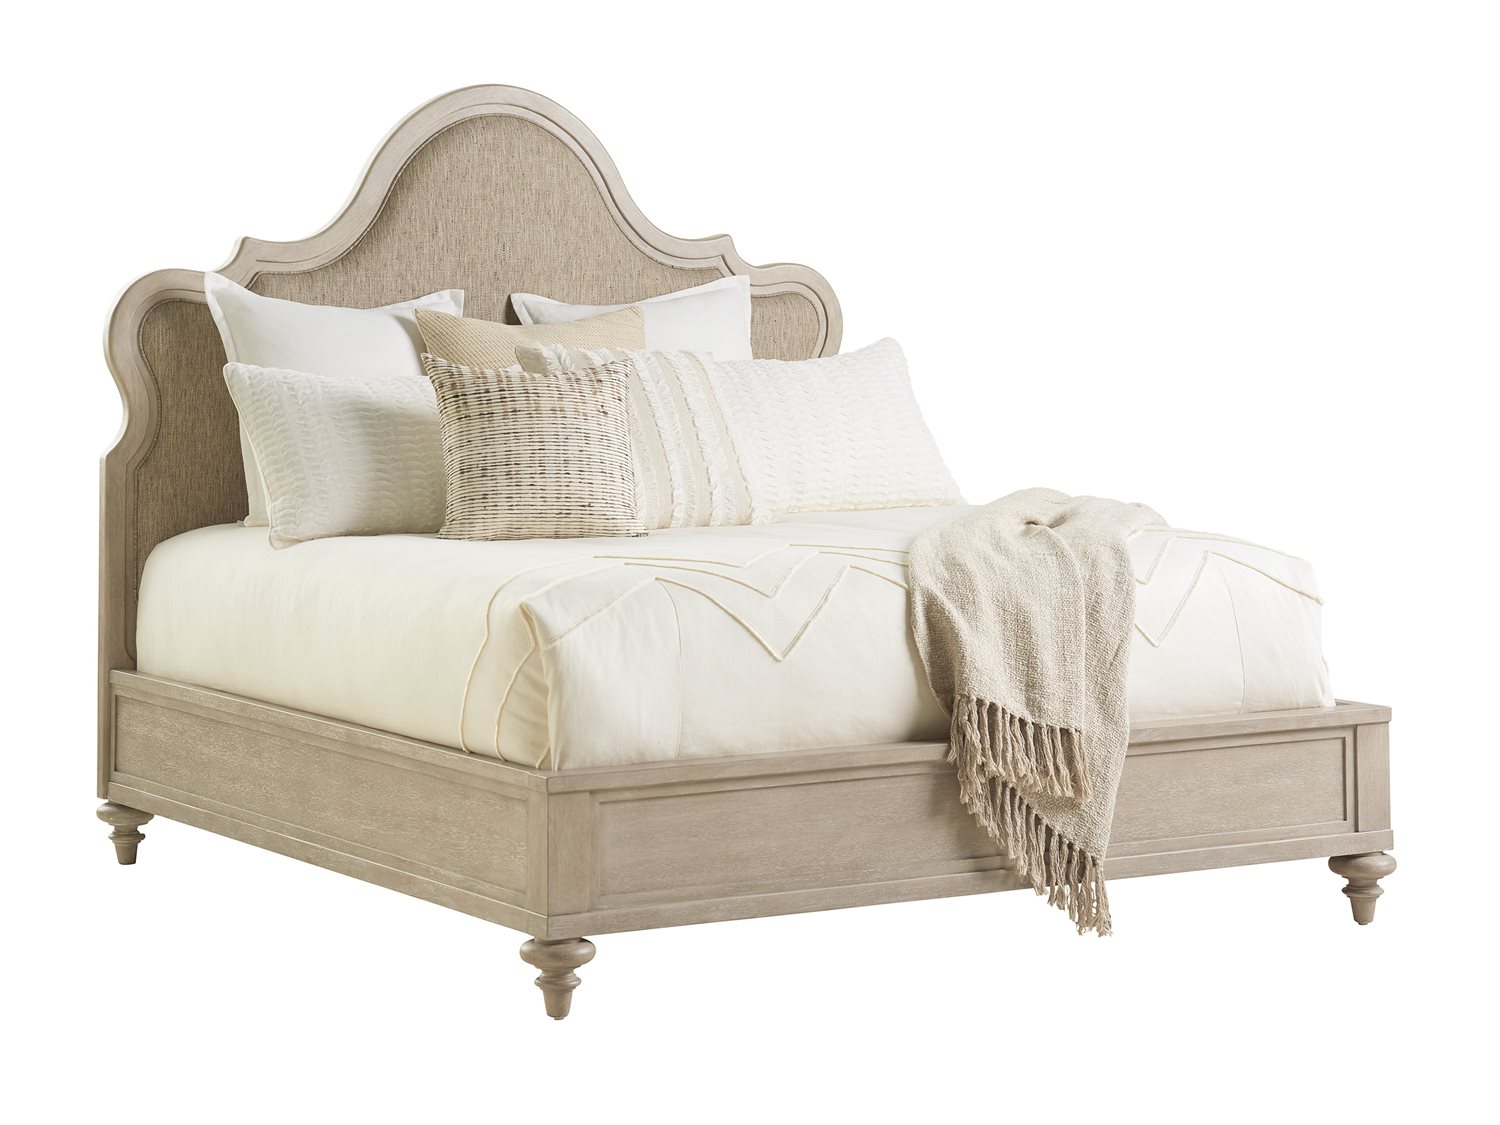 Hooker Furniture Serenity Ashore King Upholstered Panel Bed